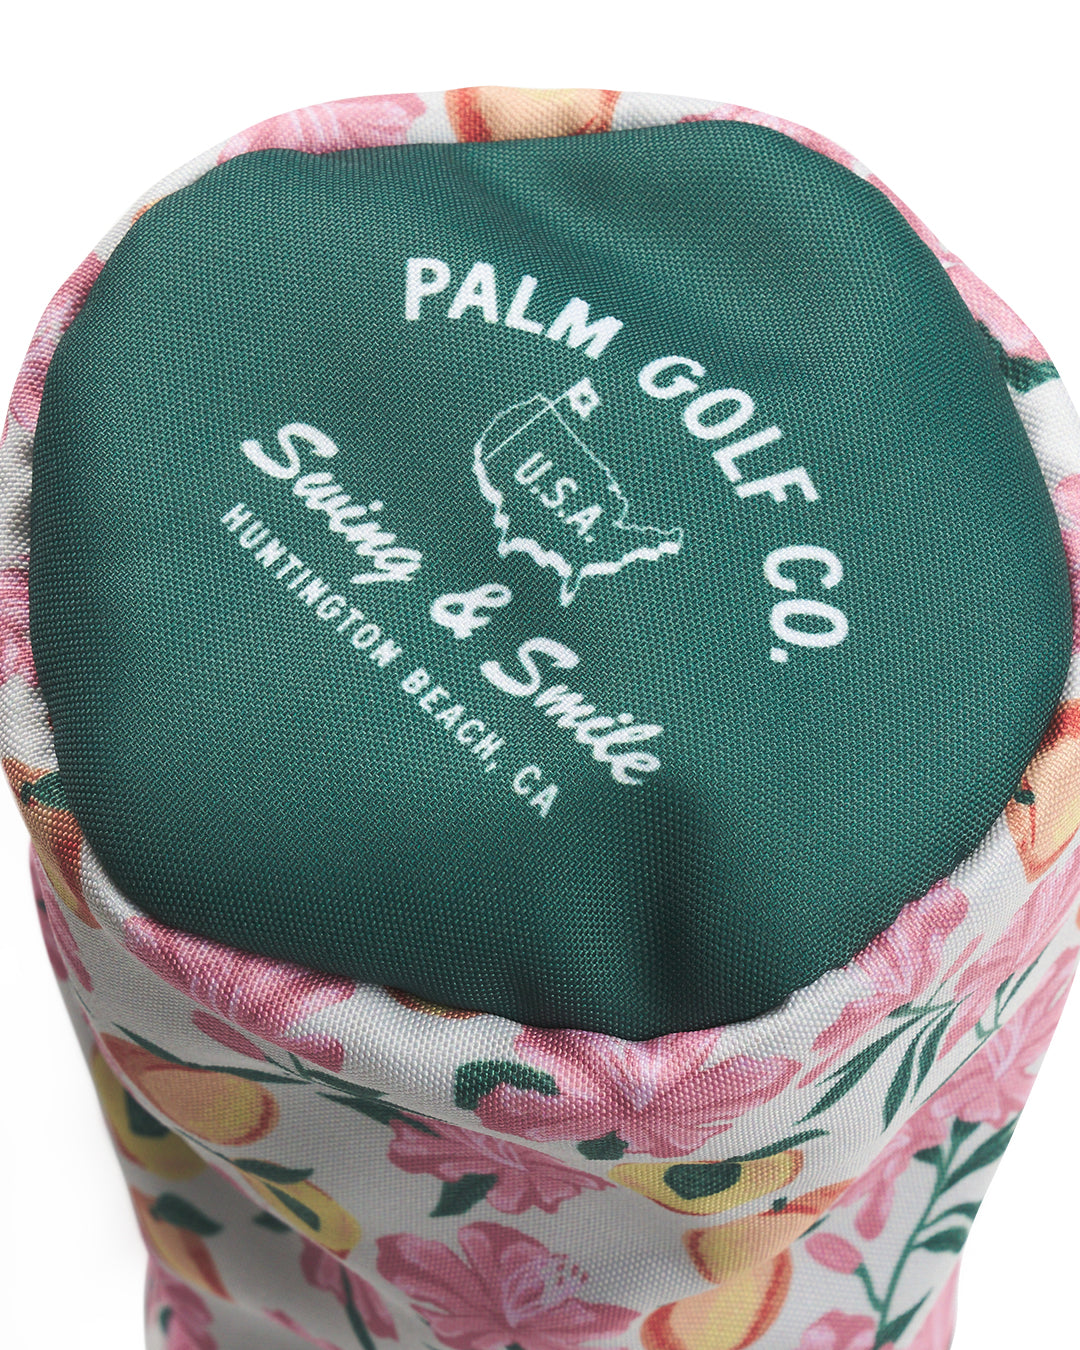 Keep It Peachy Headcover - Palm Golf Co.